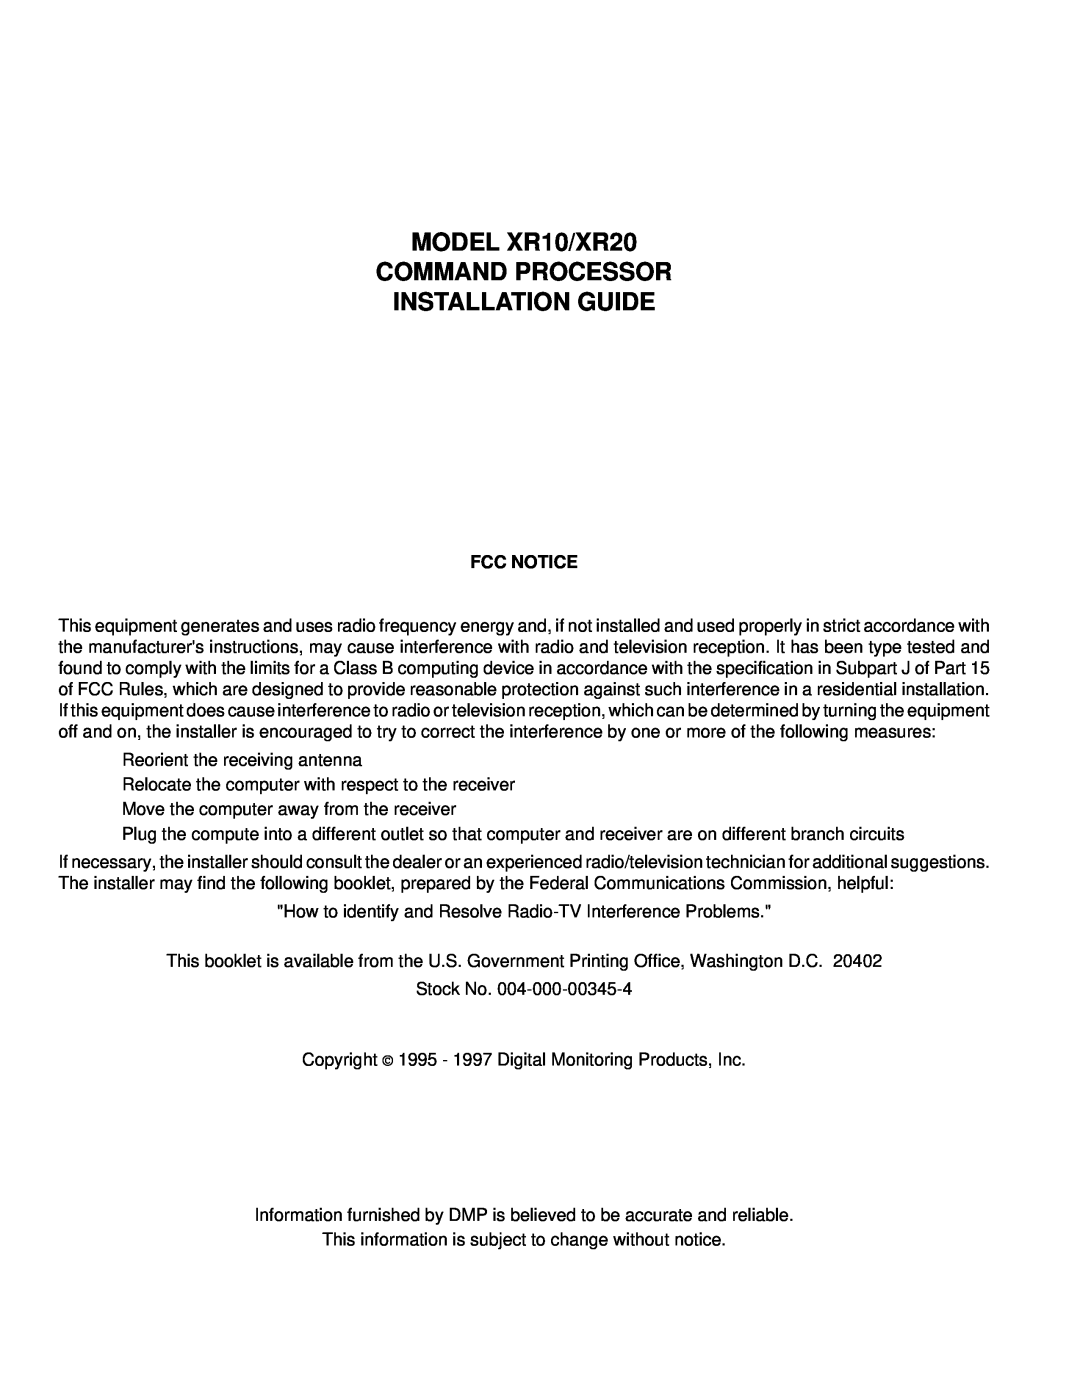 DMP Electronics LT-0229 (5 97) manual MODEL XR10/XR20 COMMAND PROCESSOR, Installation Guide, Fcc Notice 